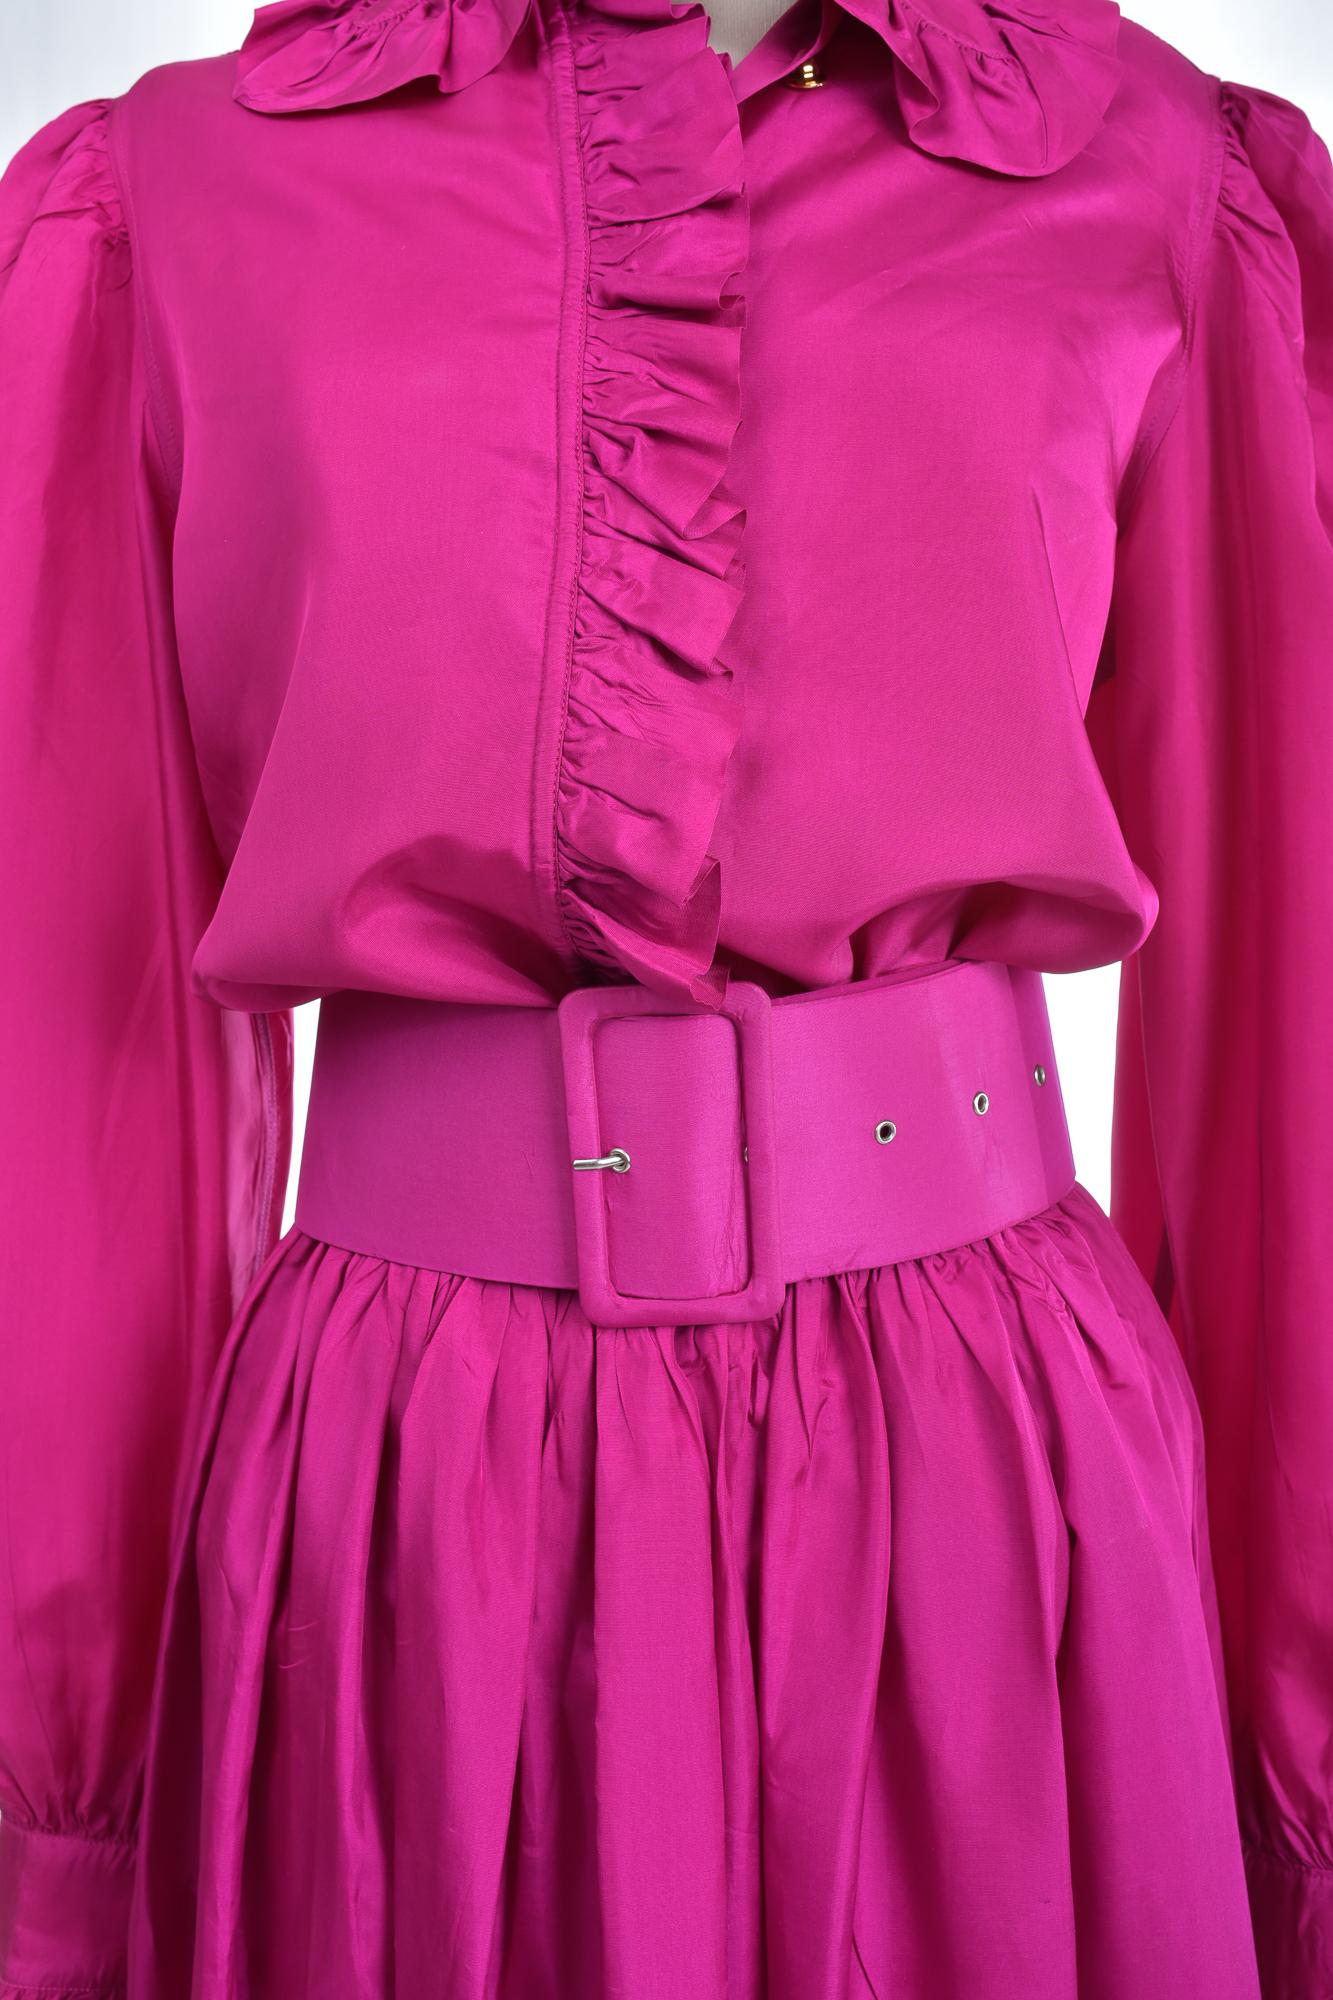 A French Fuschia Taffeta Blouse and skirt By Popy Moreni Paris Circa 1990 For Sale 2